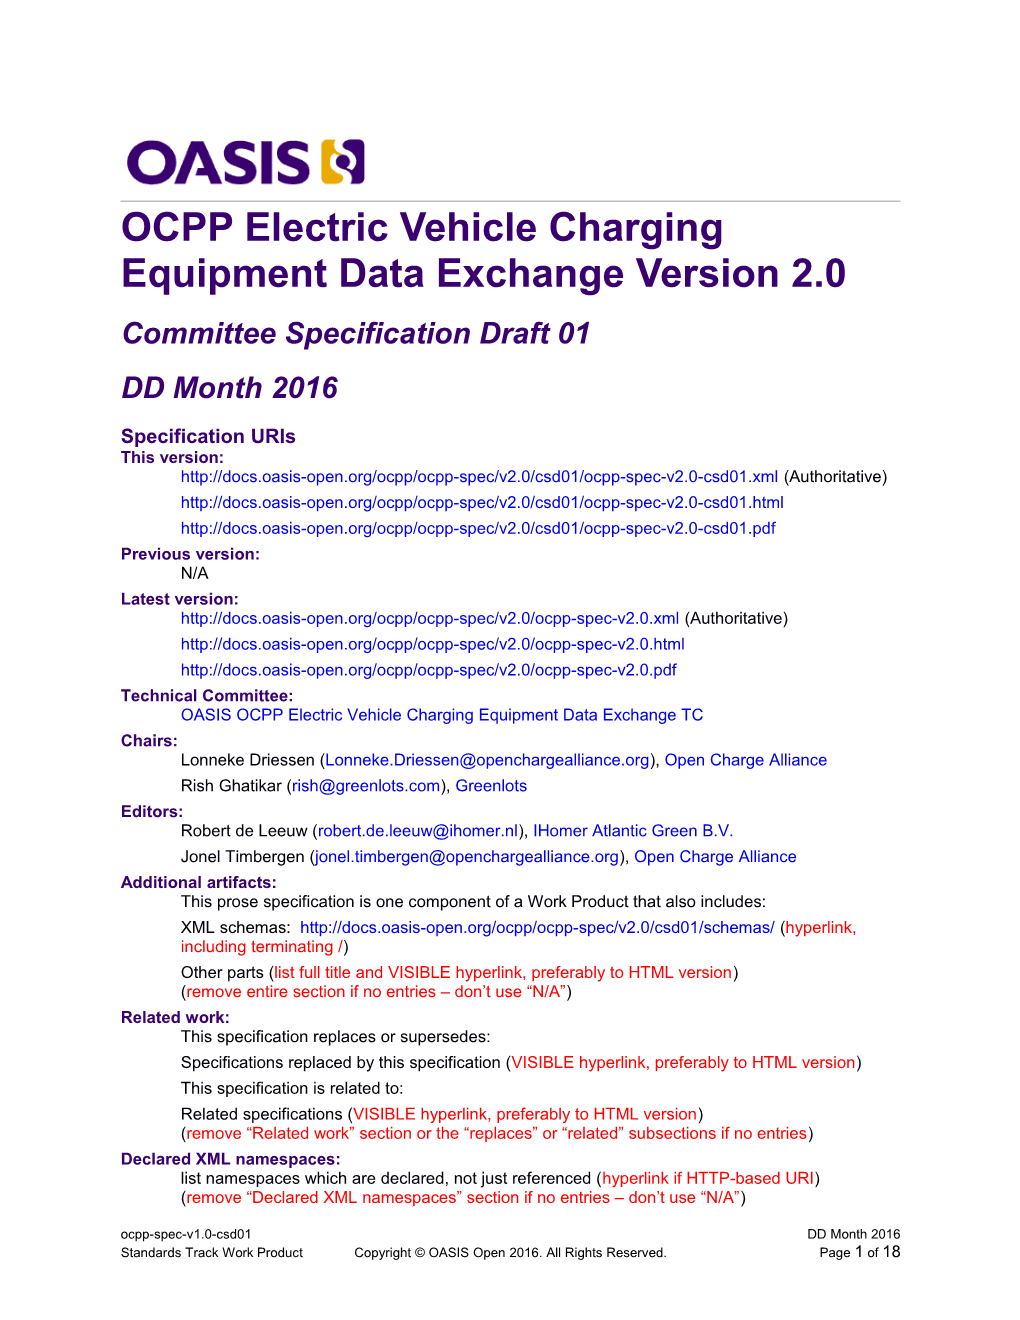 OCPP Electric Vehicle Charging Equipment Data Exchange Version 2.0